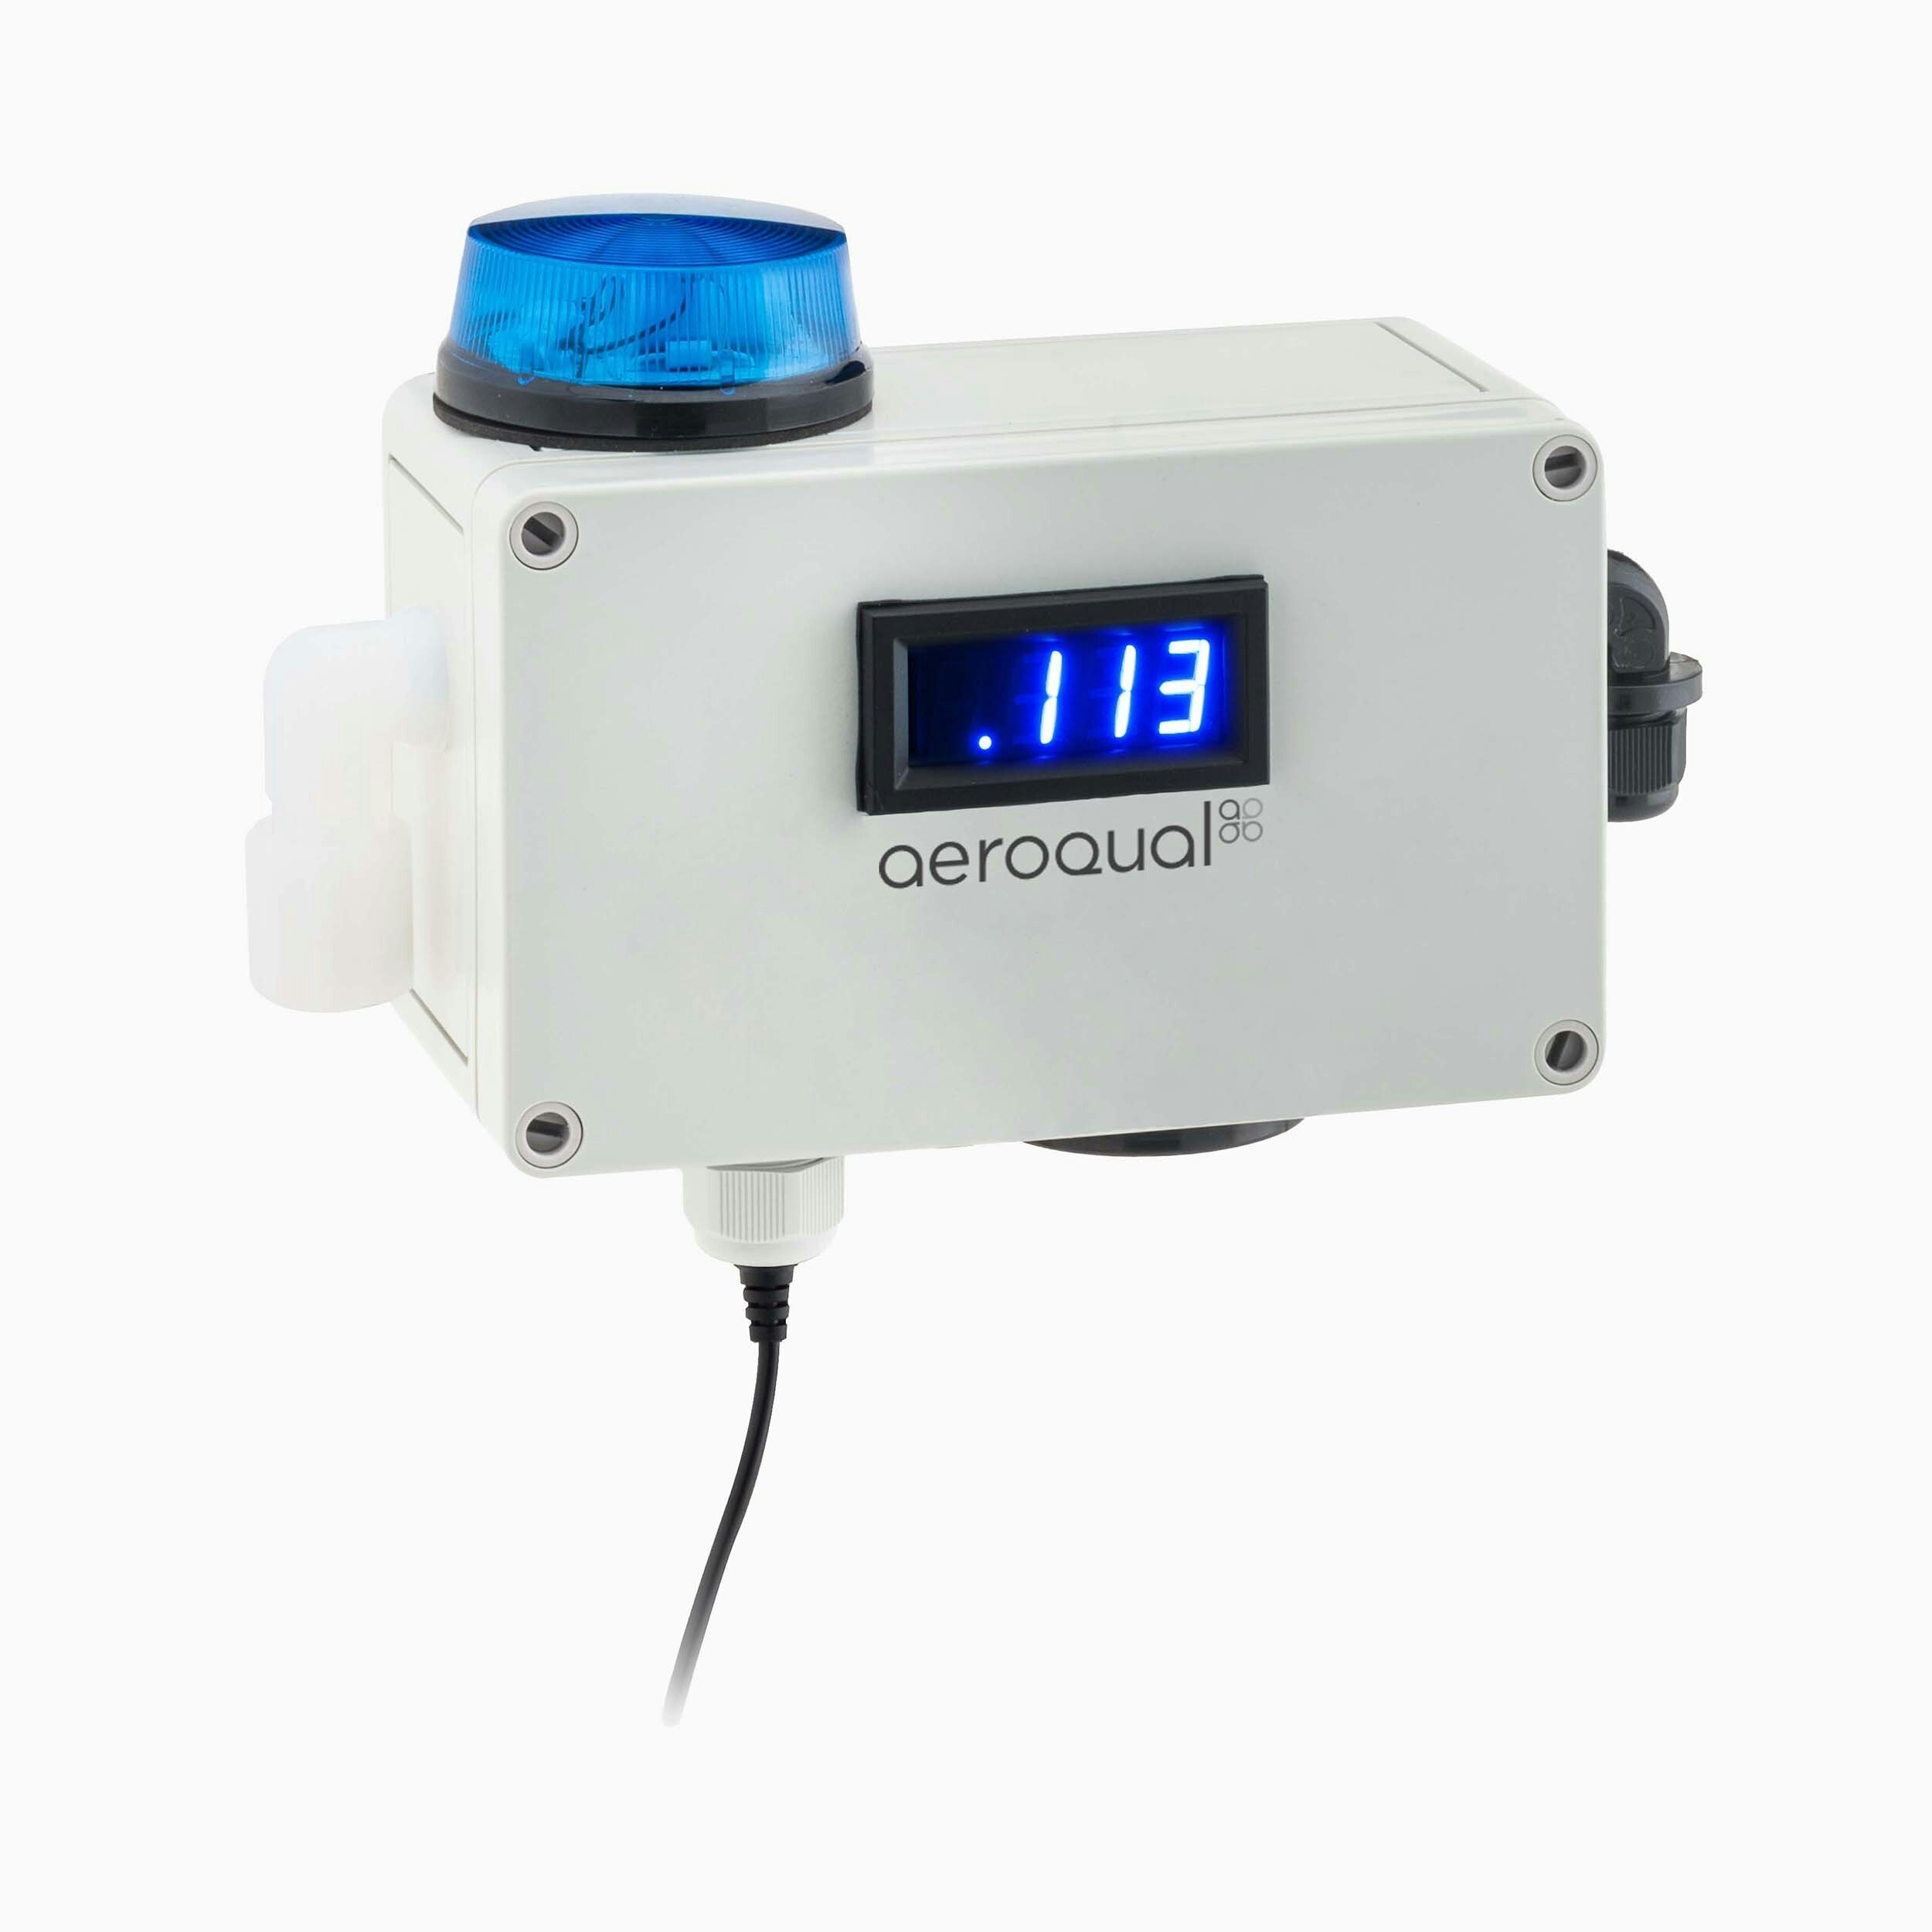 Series 930 – Fixed Ozone Monitor